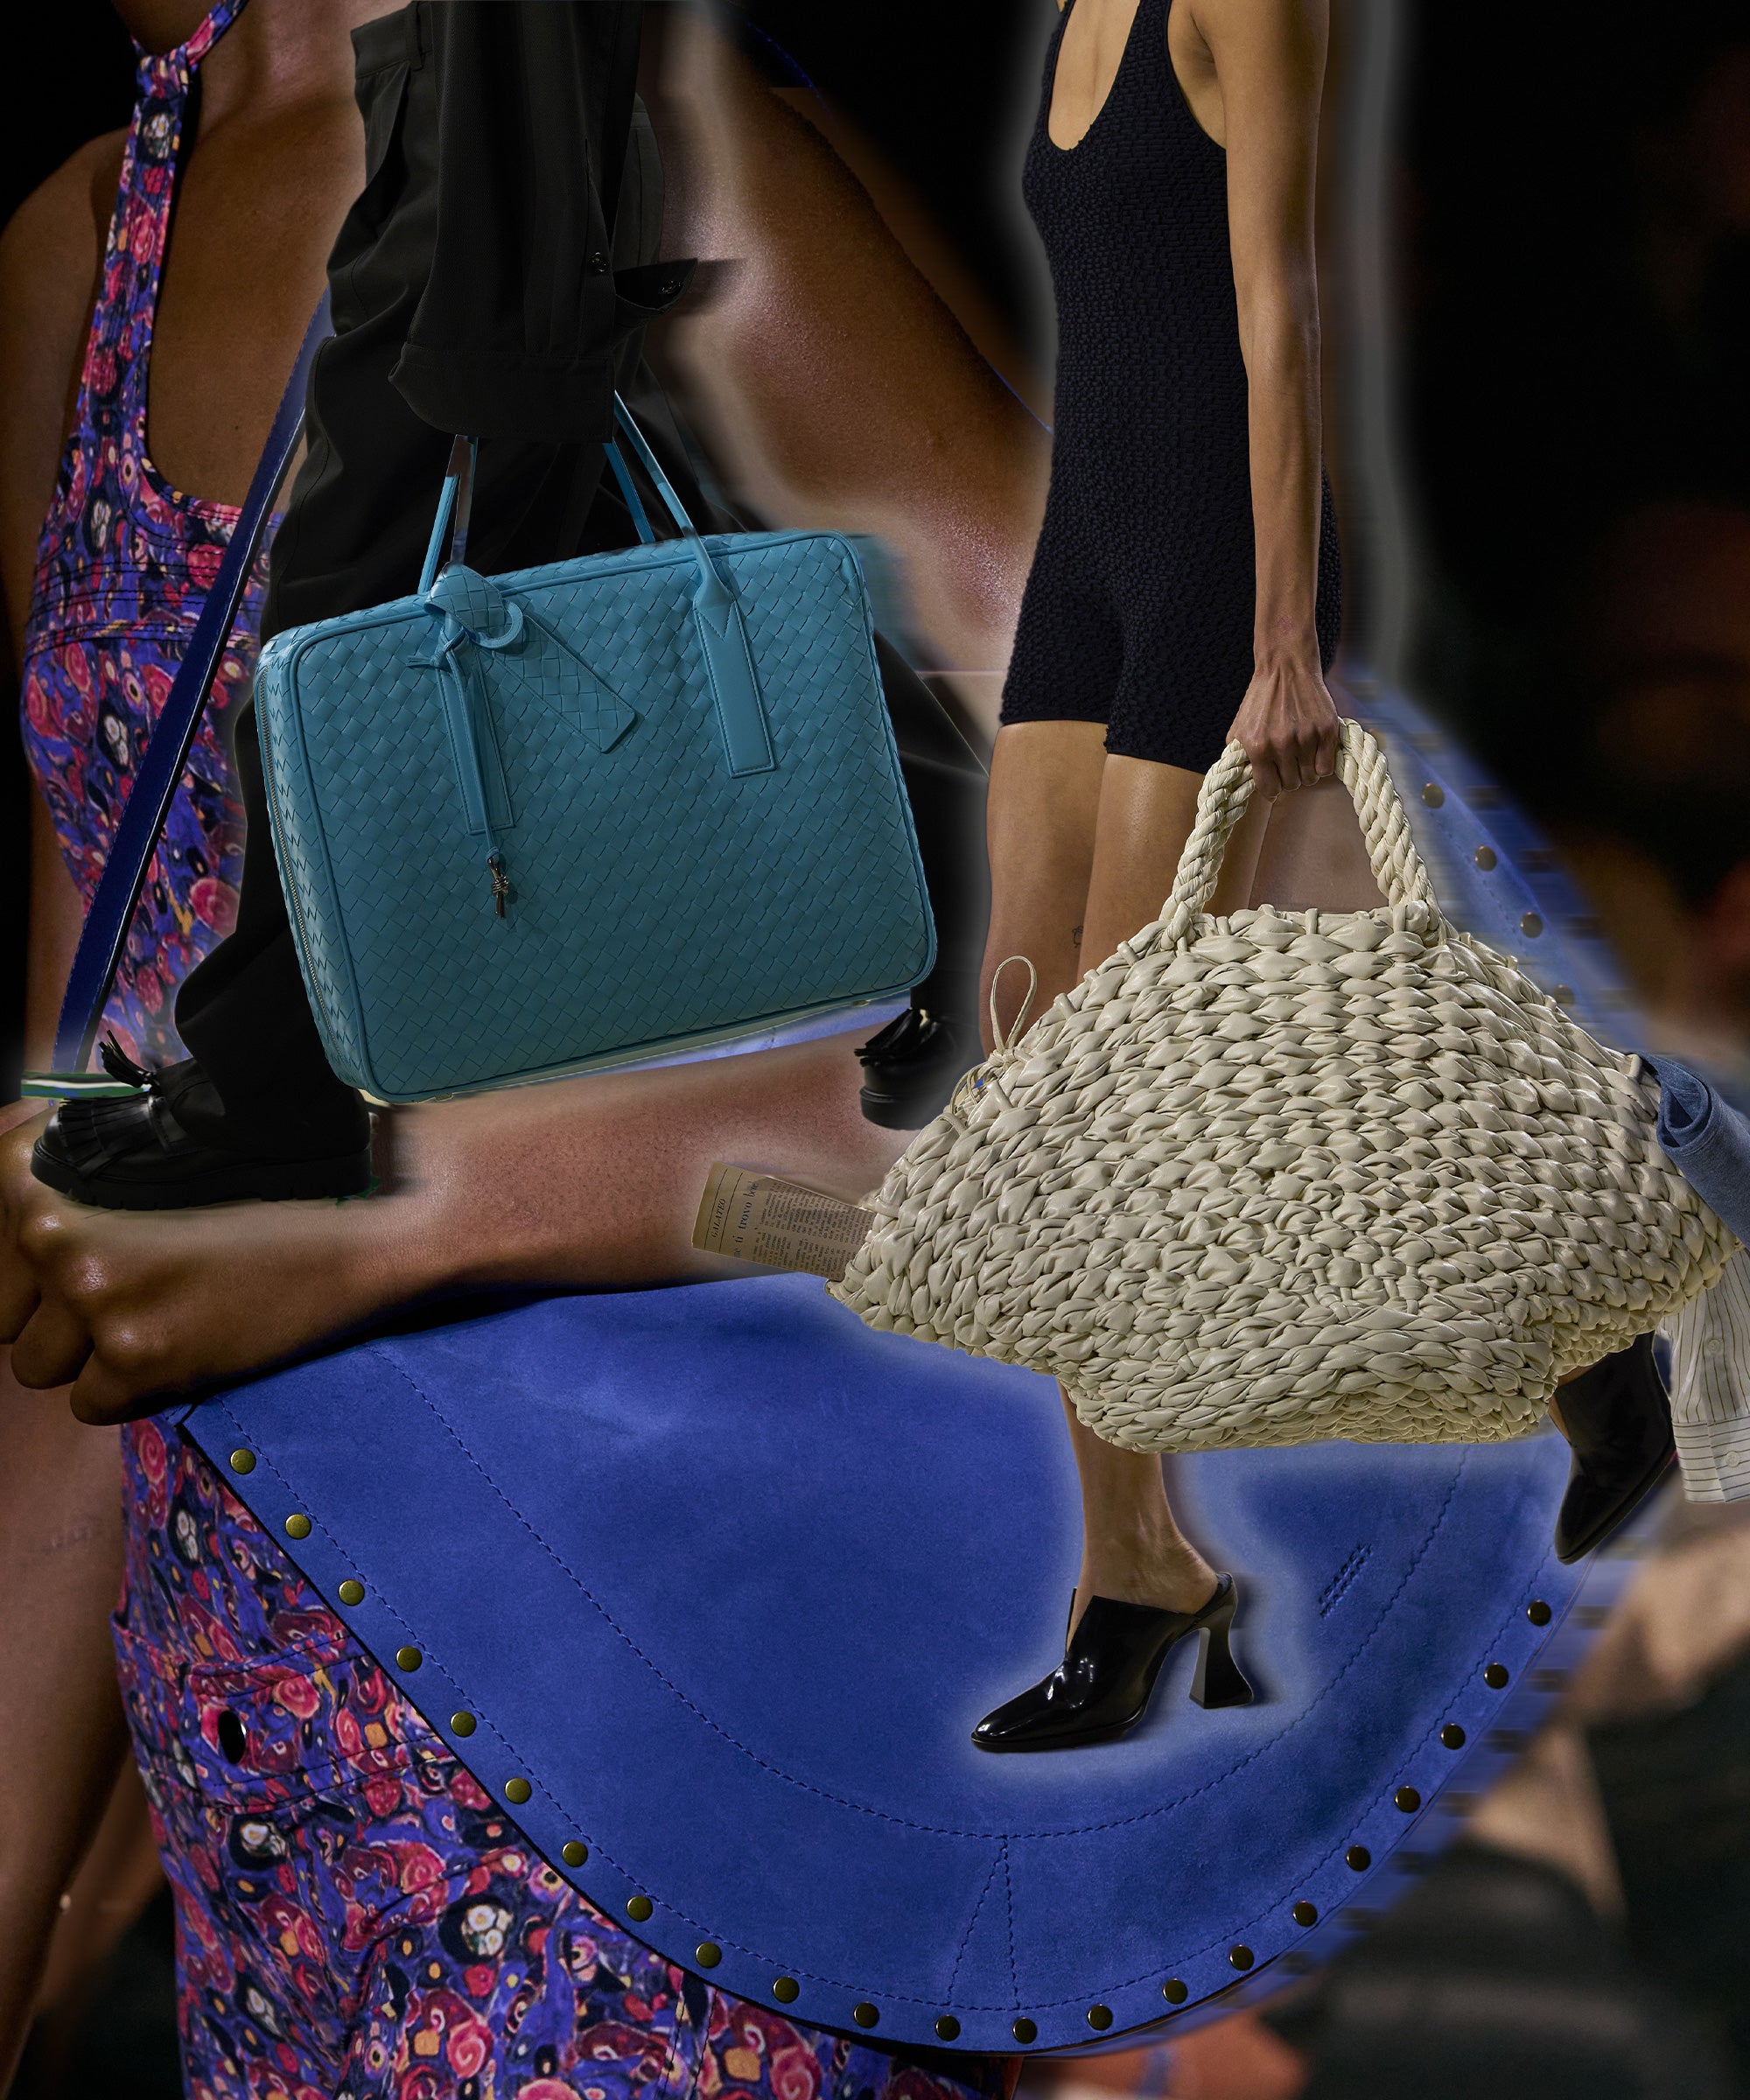 Kylie Jenner gifted $100K Hermès handbag: Other stars seen toting around  pricey Birkin purses | Daily Mail Online